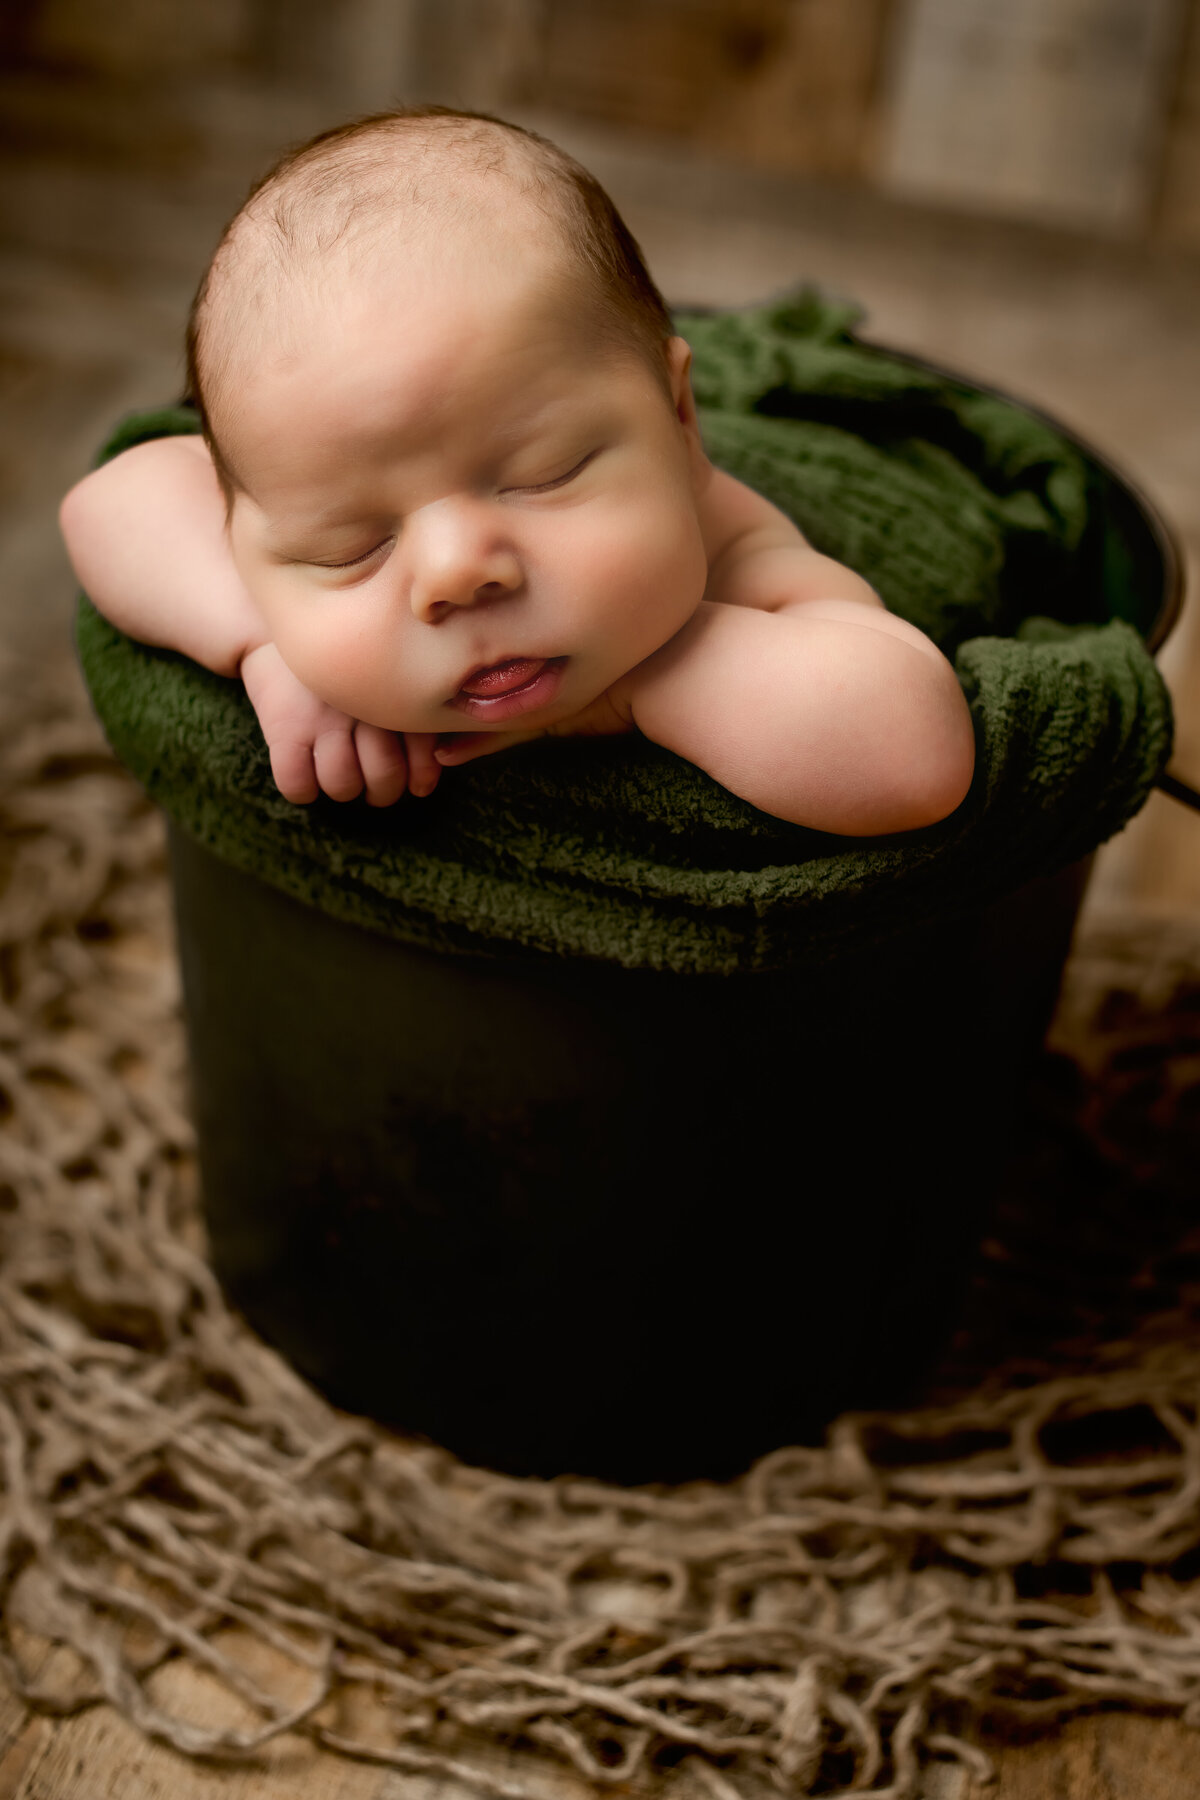 Spring, Tx little boy sleeping in a bucket photoshoot